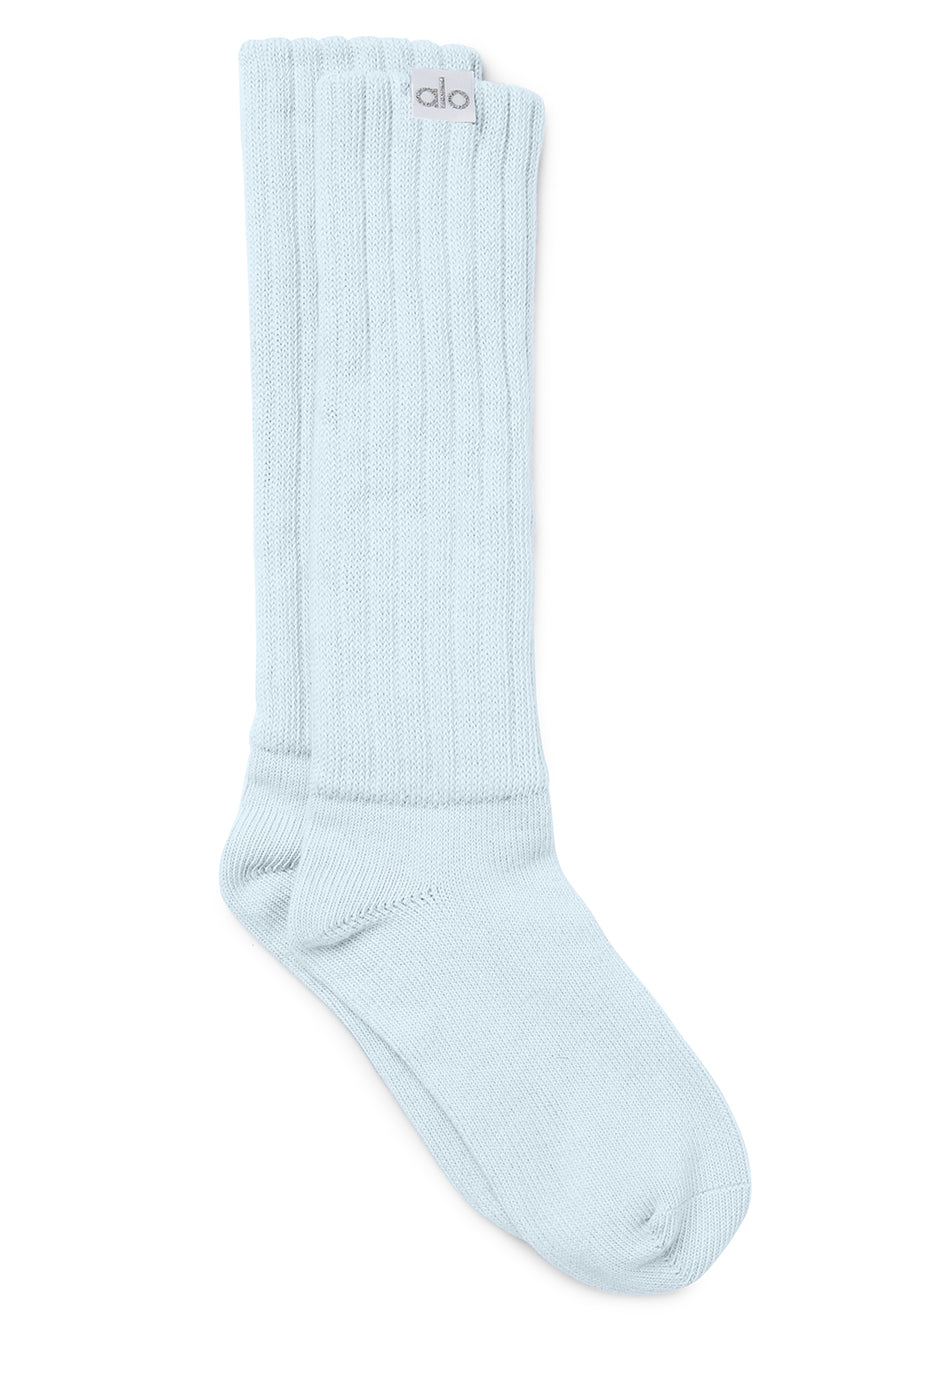 Alo Yoga Scrunch socks try on , 🤎 20 original.